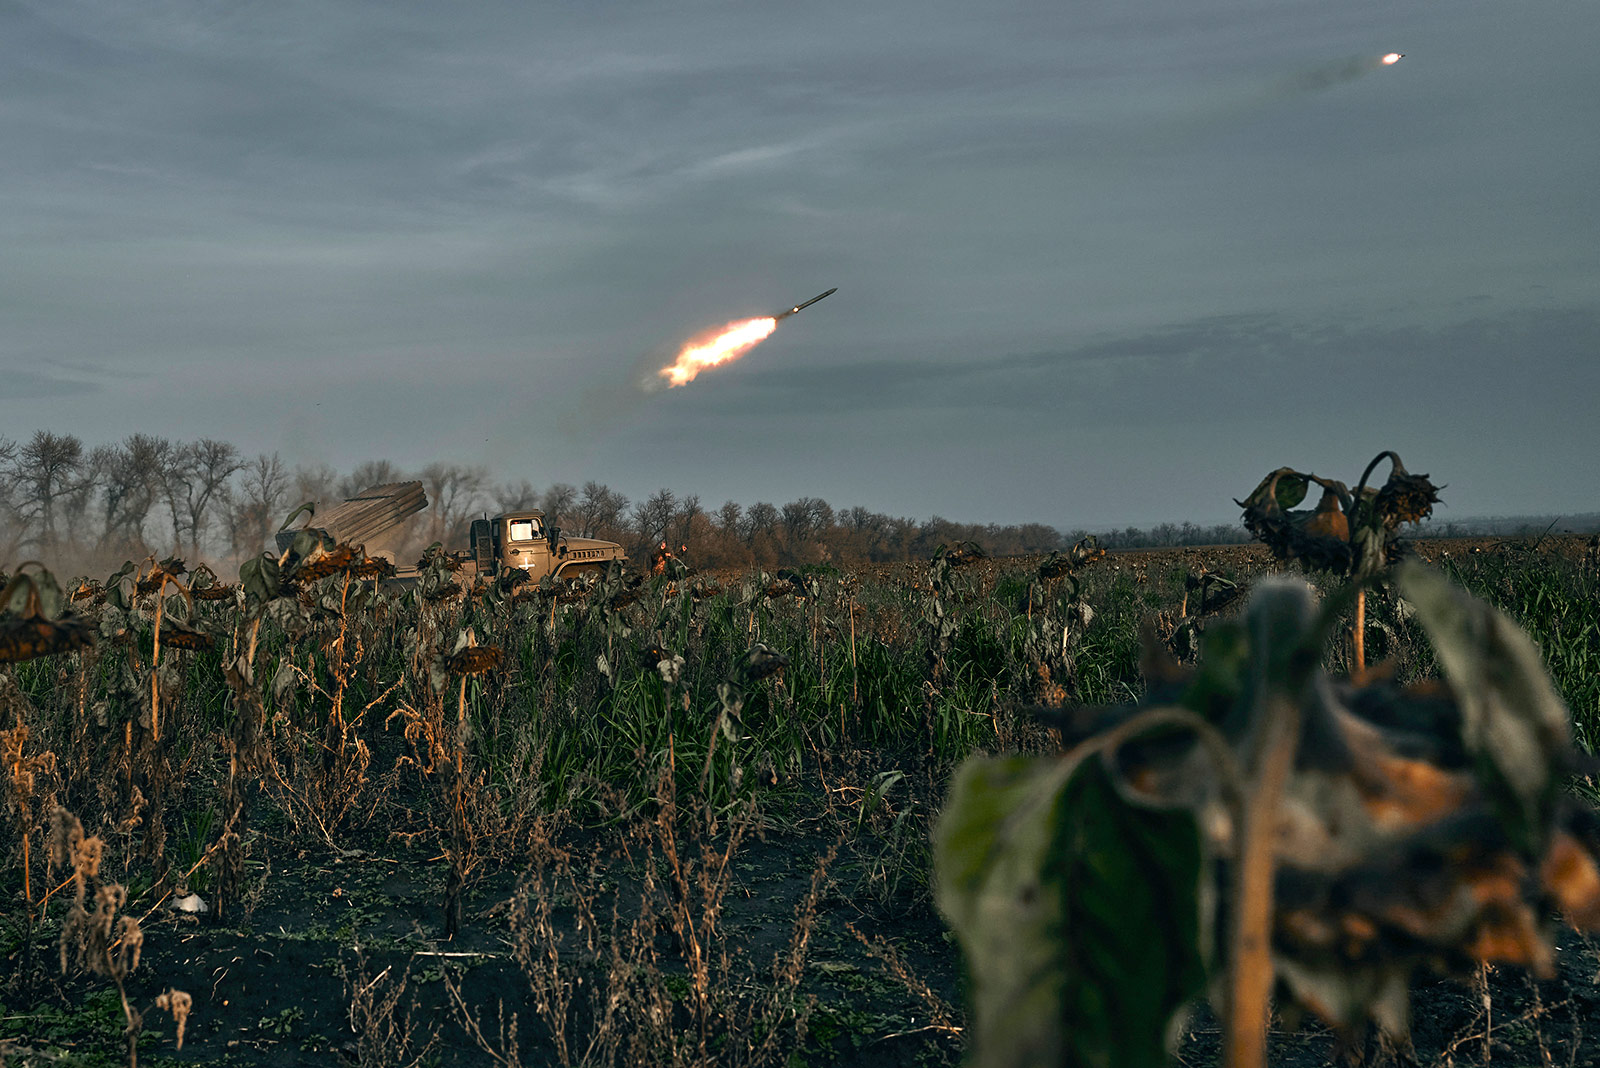 On November 24, the Ukrainian military fired rockets at Russian positions near Bakhmut, Ukraine.